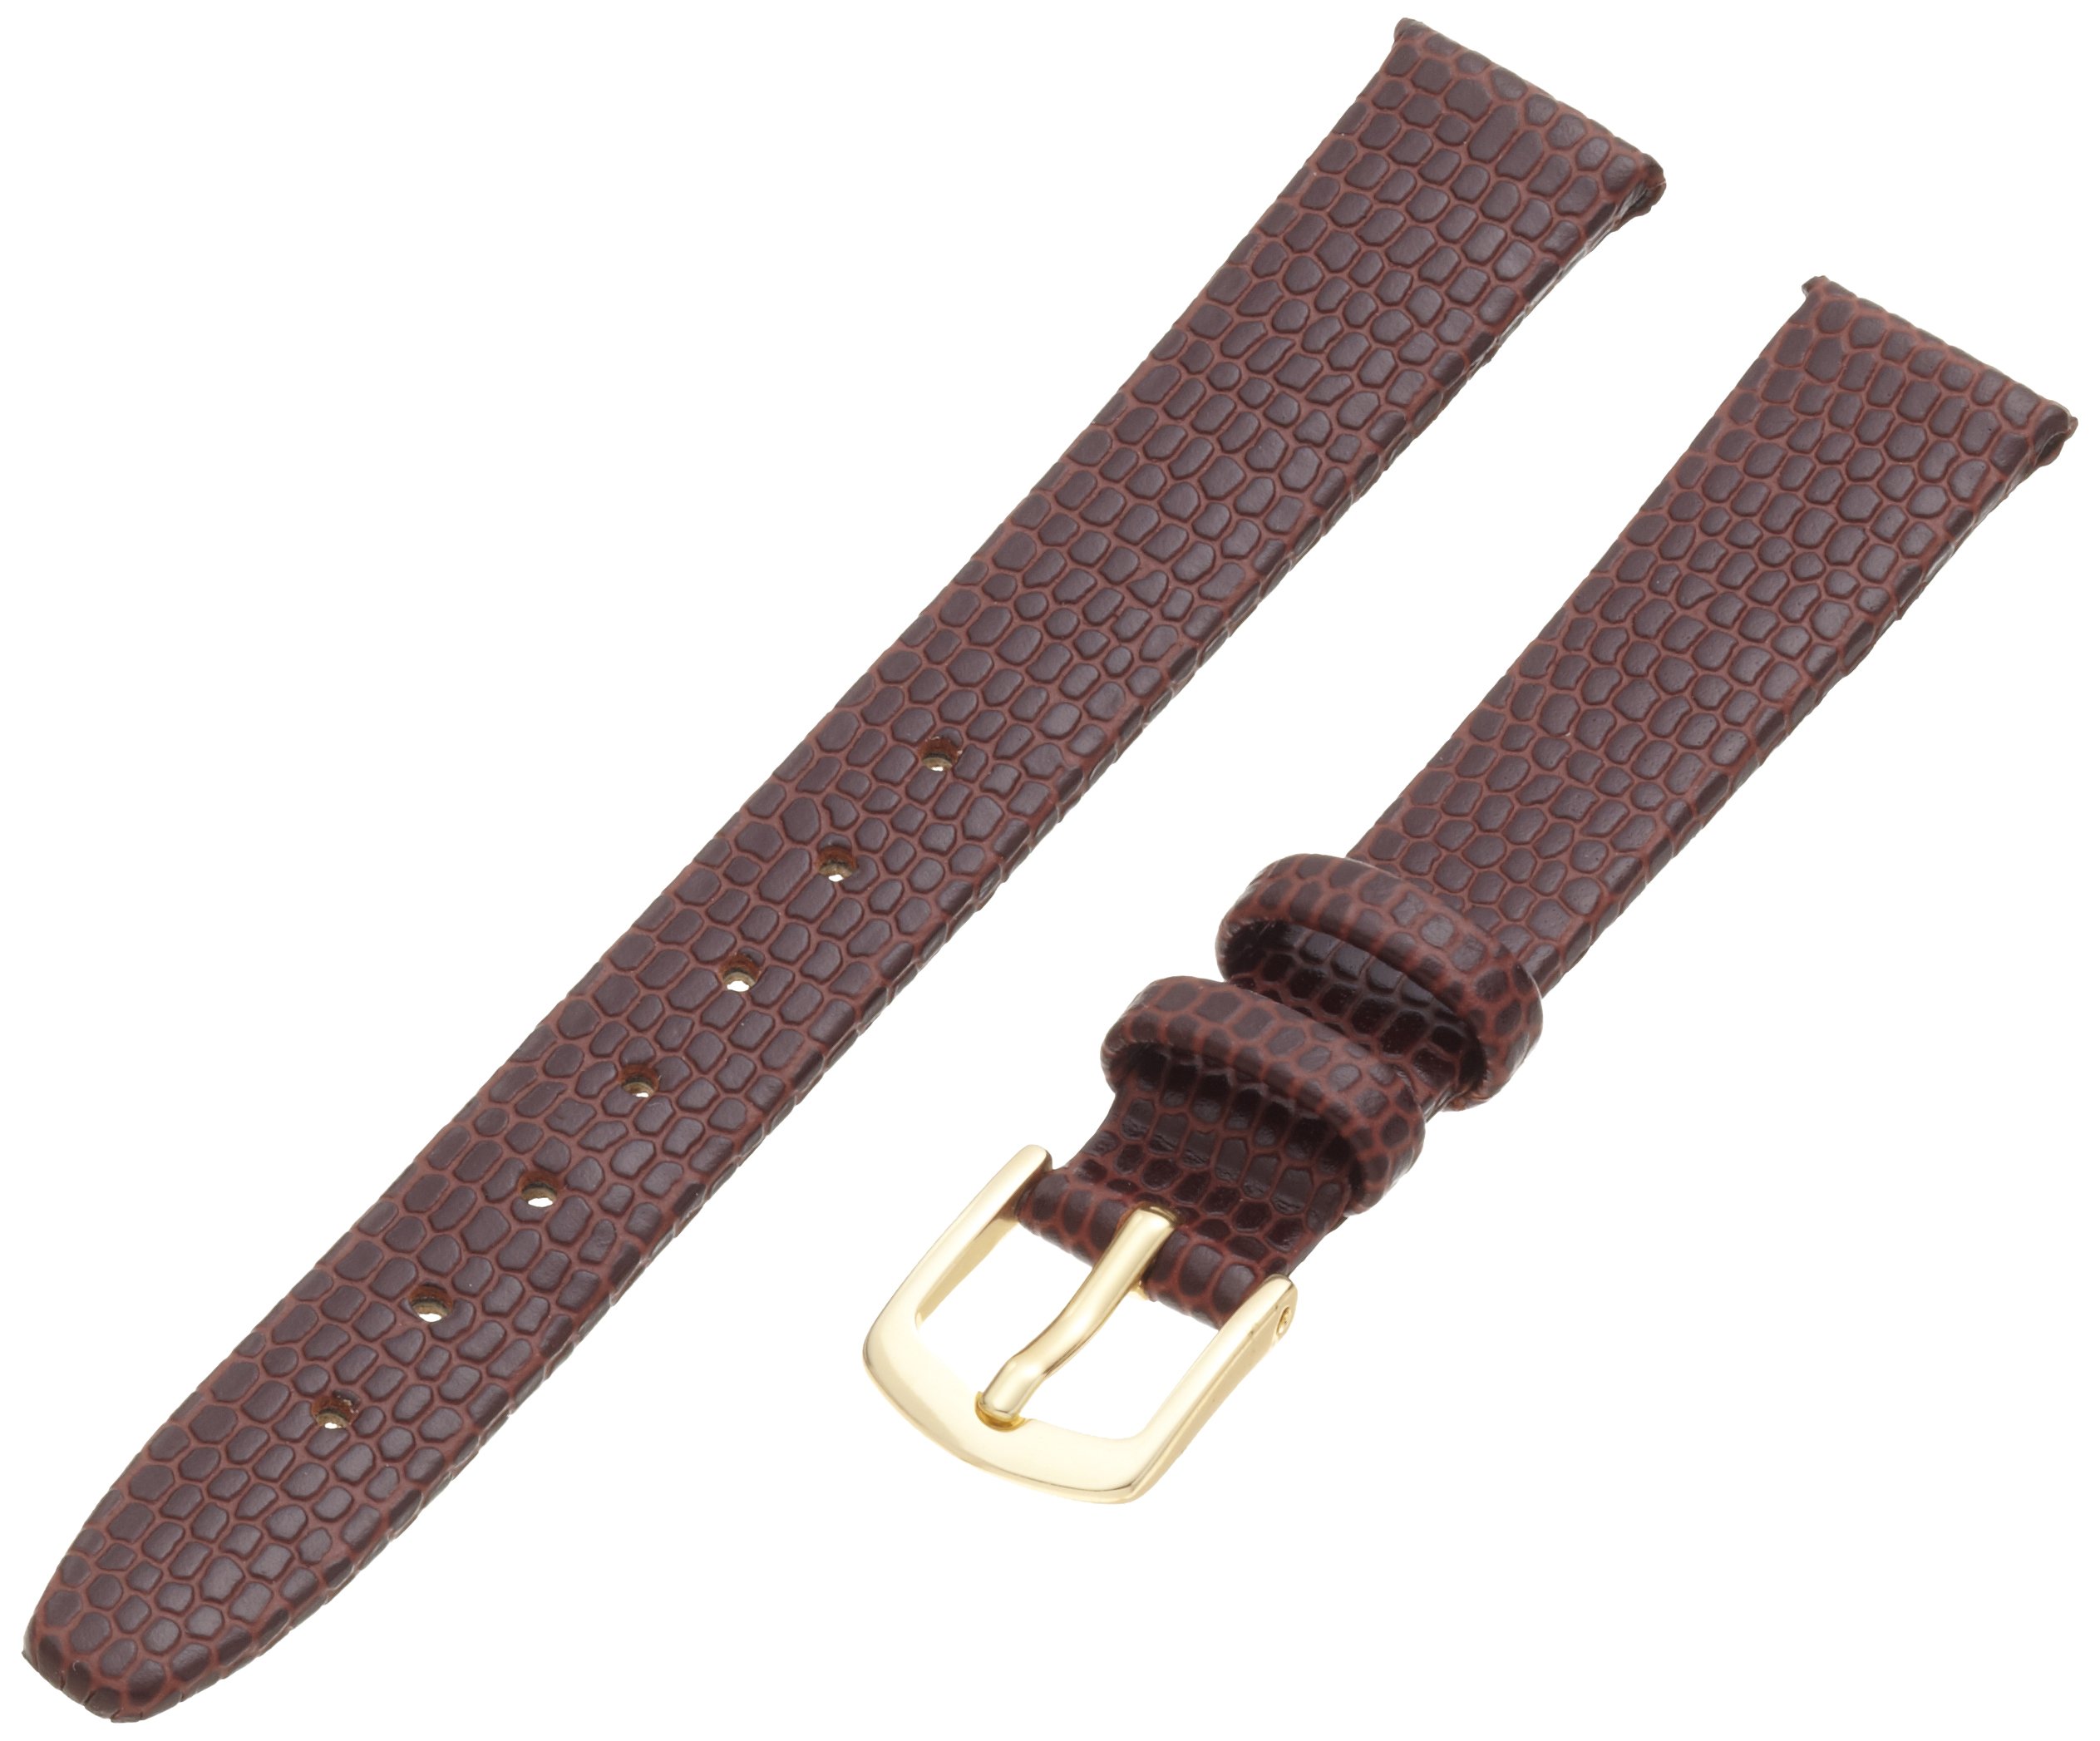 Hadley-Roma Women's LSL706LA 100 Genuine Leather Strap Watchband